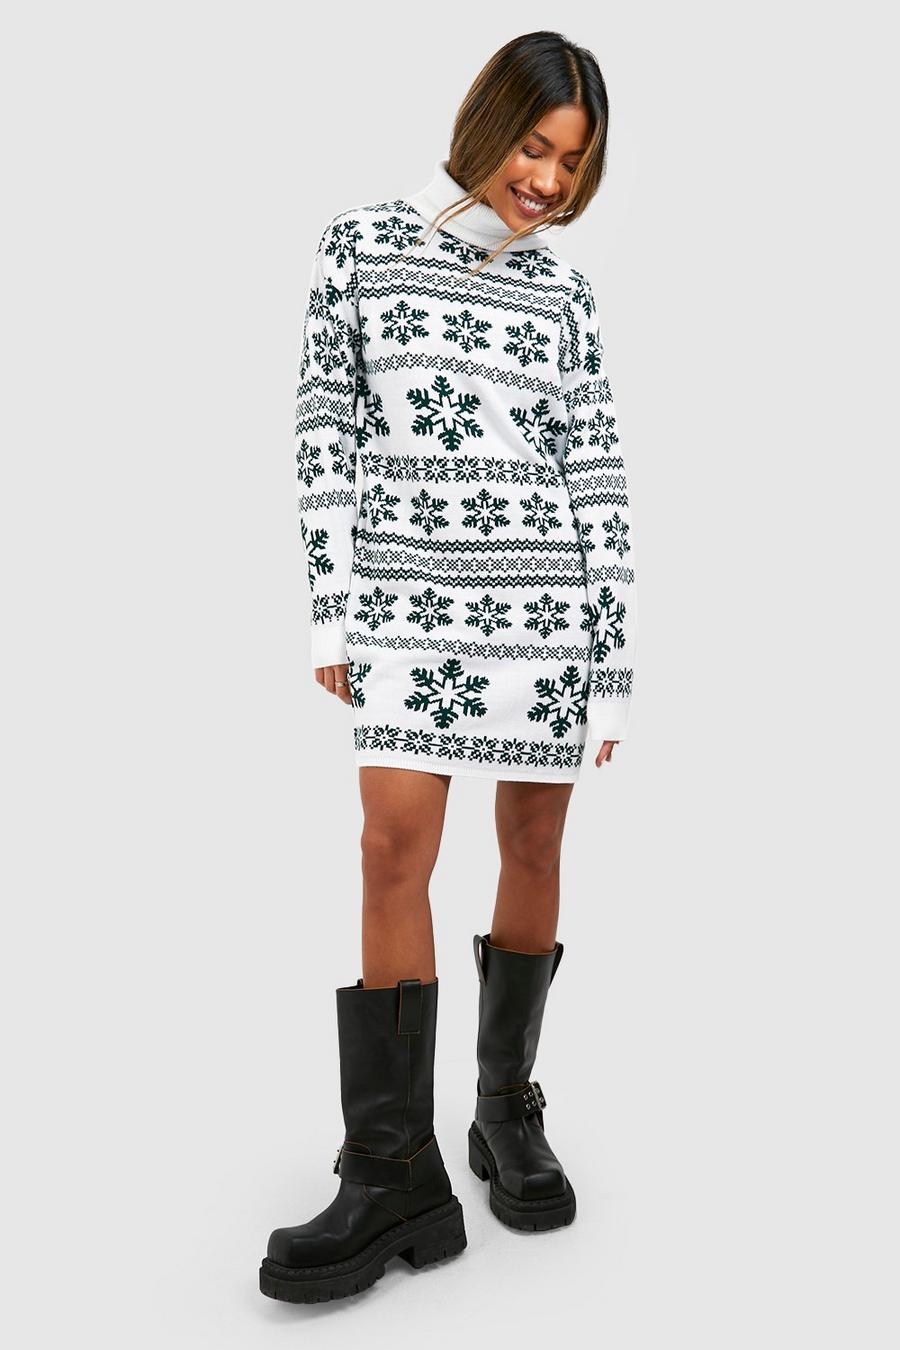 Bottle Turtleneck Snowflake And Fairisle Christmas Sweater Dress